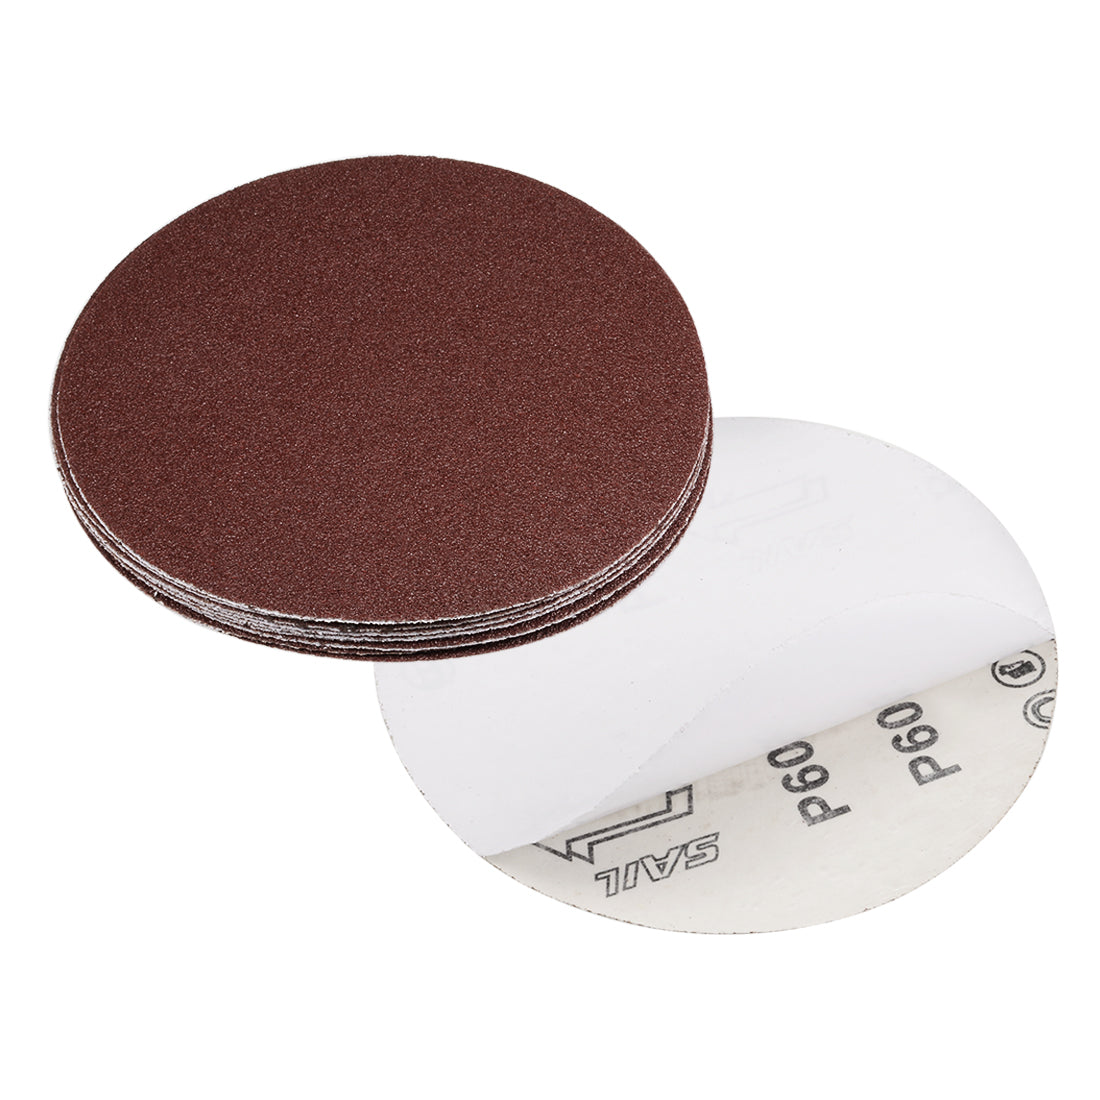 uxcell Uxcell 6-inch 60-Grits PSA Sanding Disc, Adhesive-Backed Sanding Sheets Aluminum Oxide Sandpaper for Random Orbital Sander 10pcs